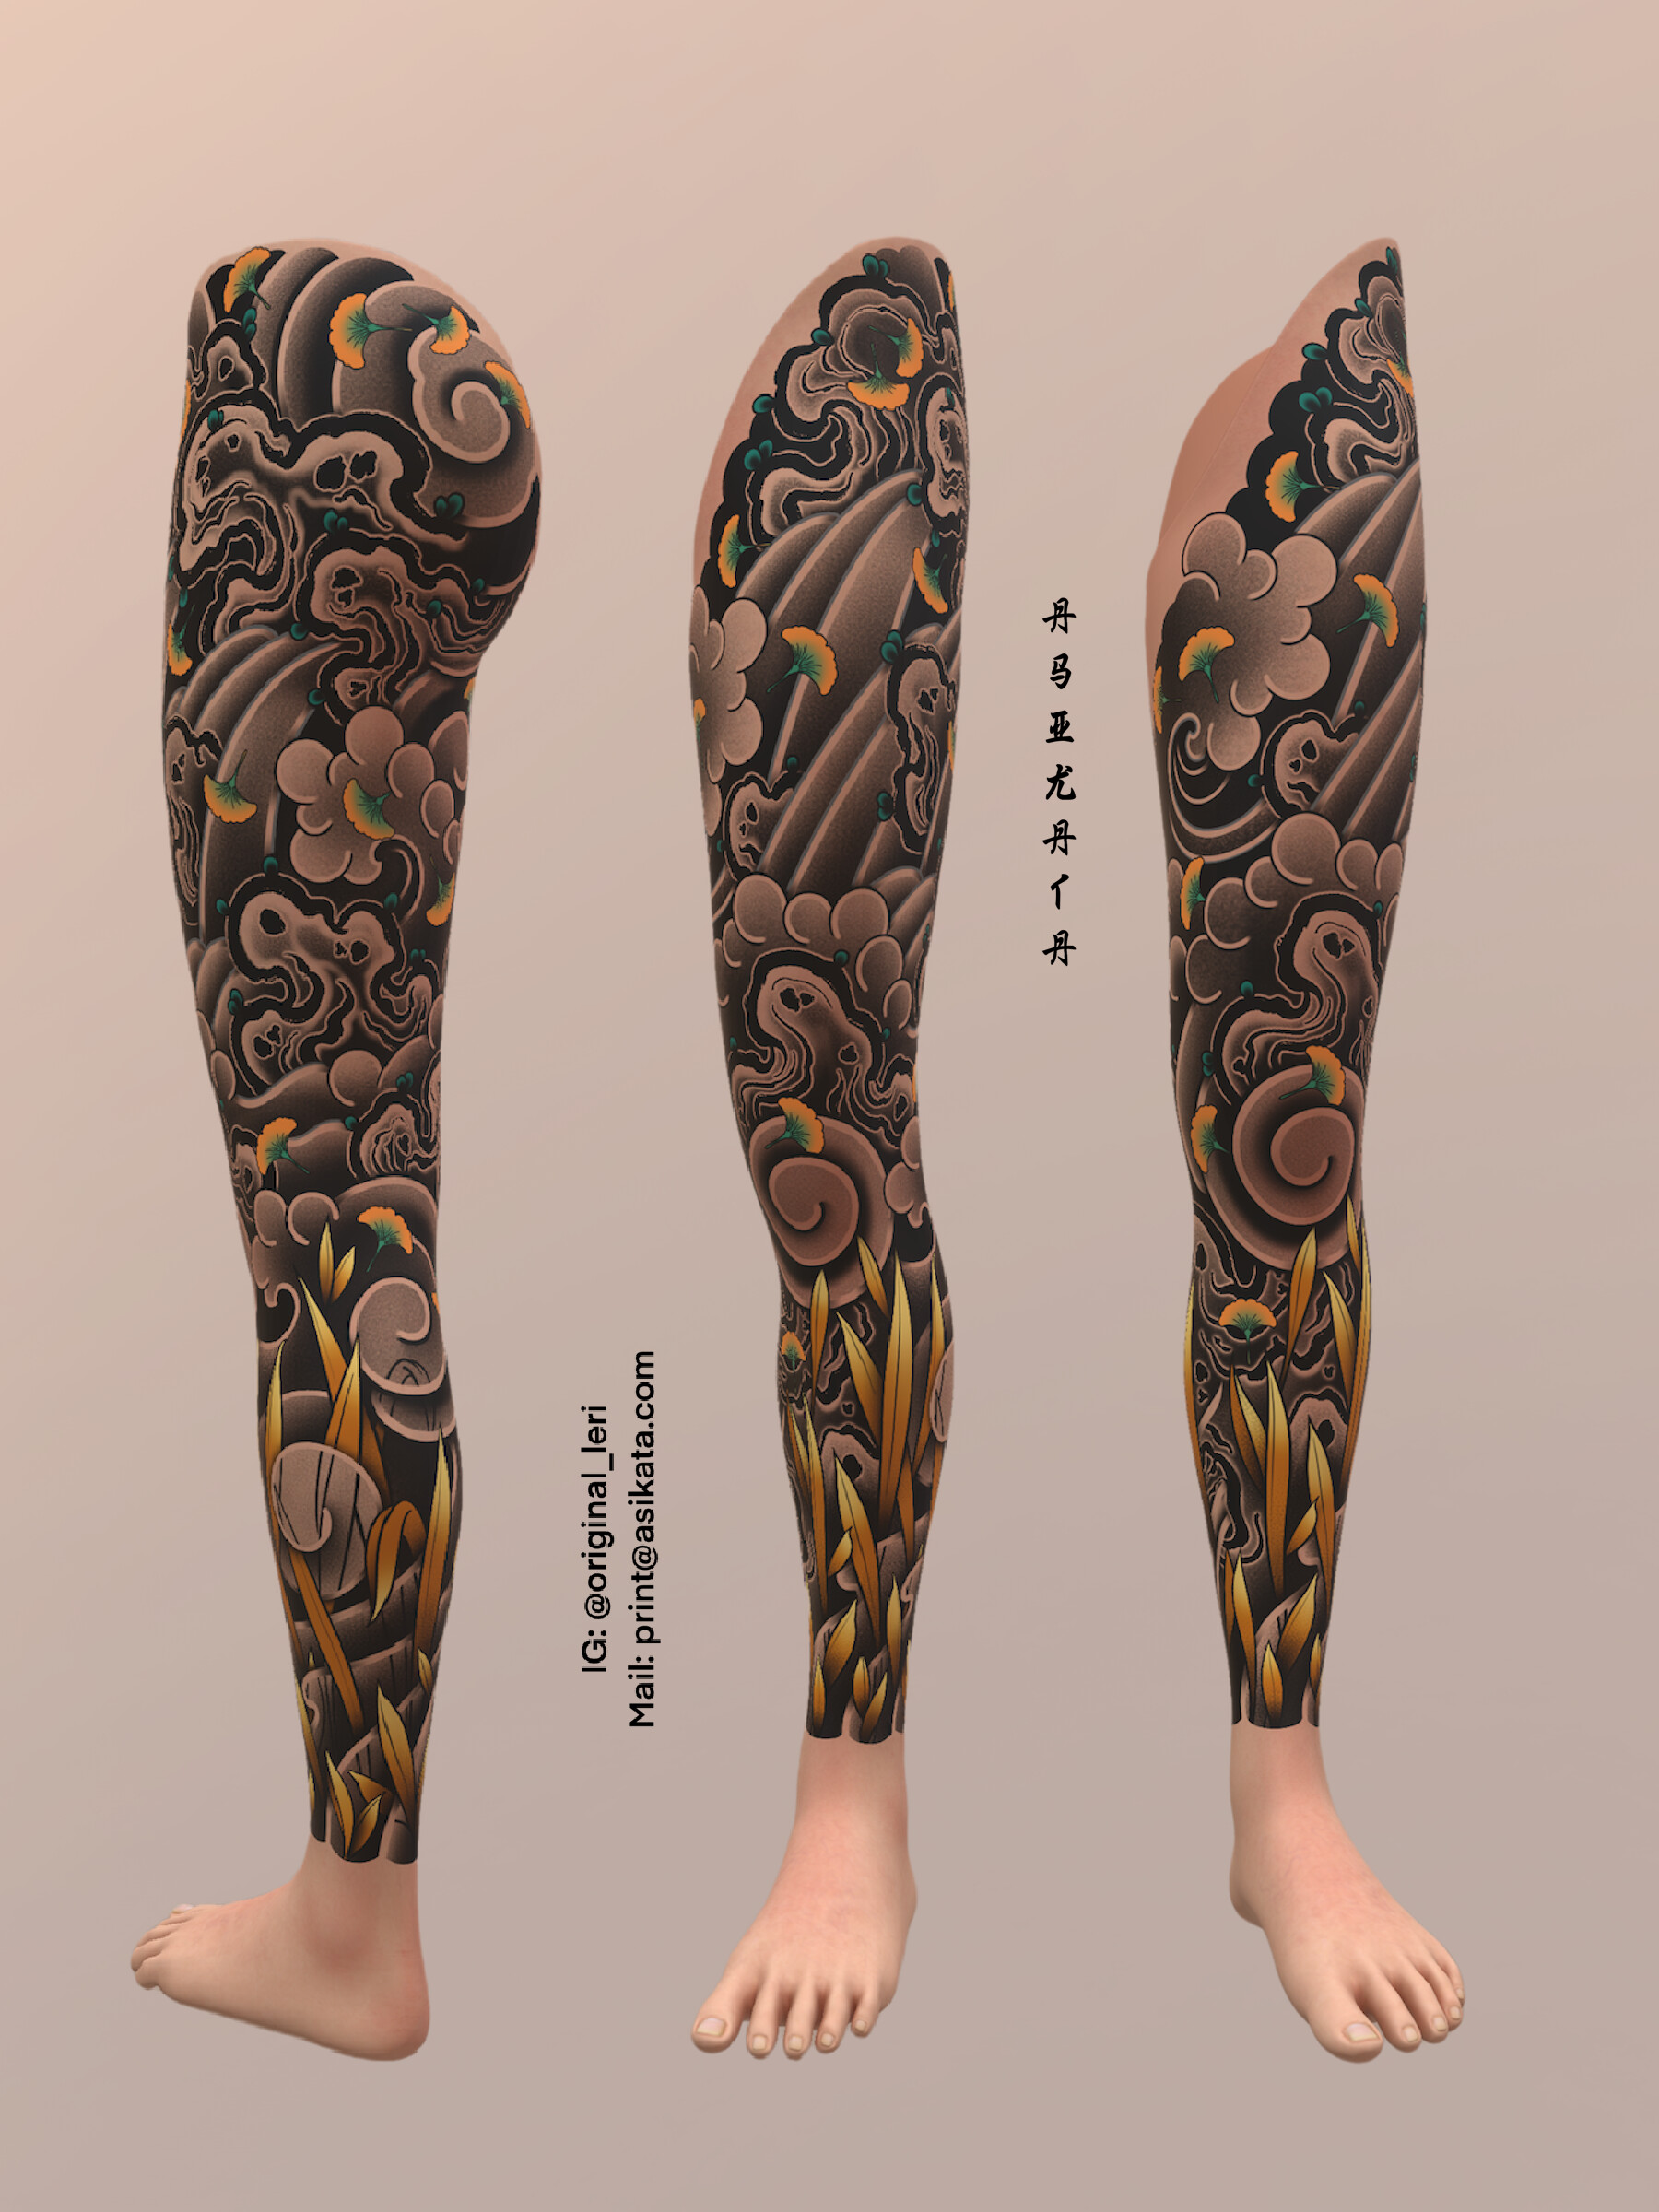 Oni neo traditional tattoo | Neo traditional tattoo, Samurai tattoo design,  Tattoo sketches